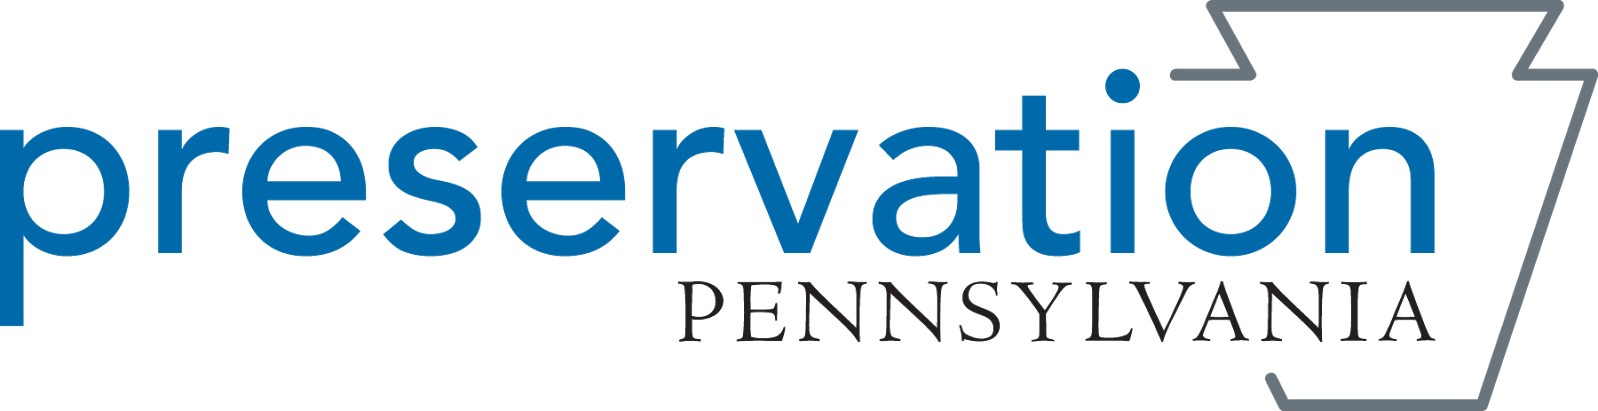 Preservation Pennsylvania logo